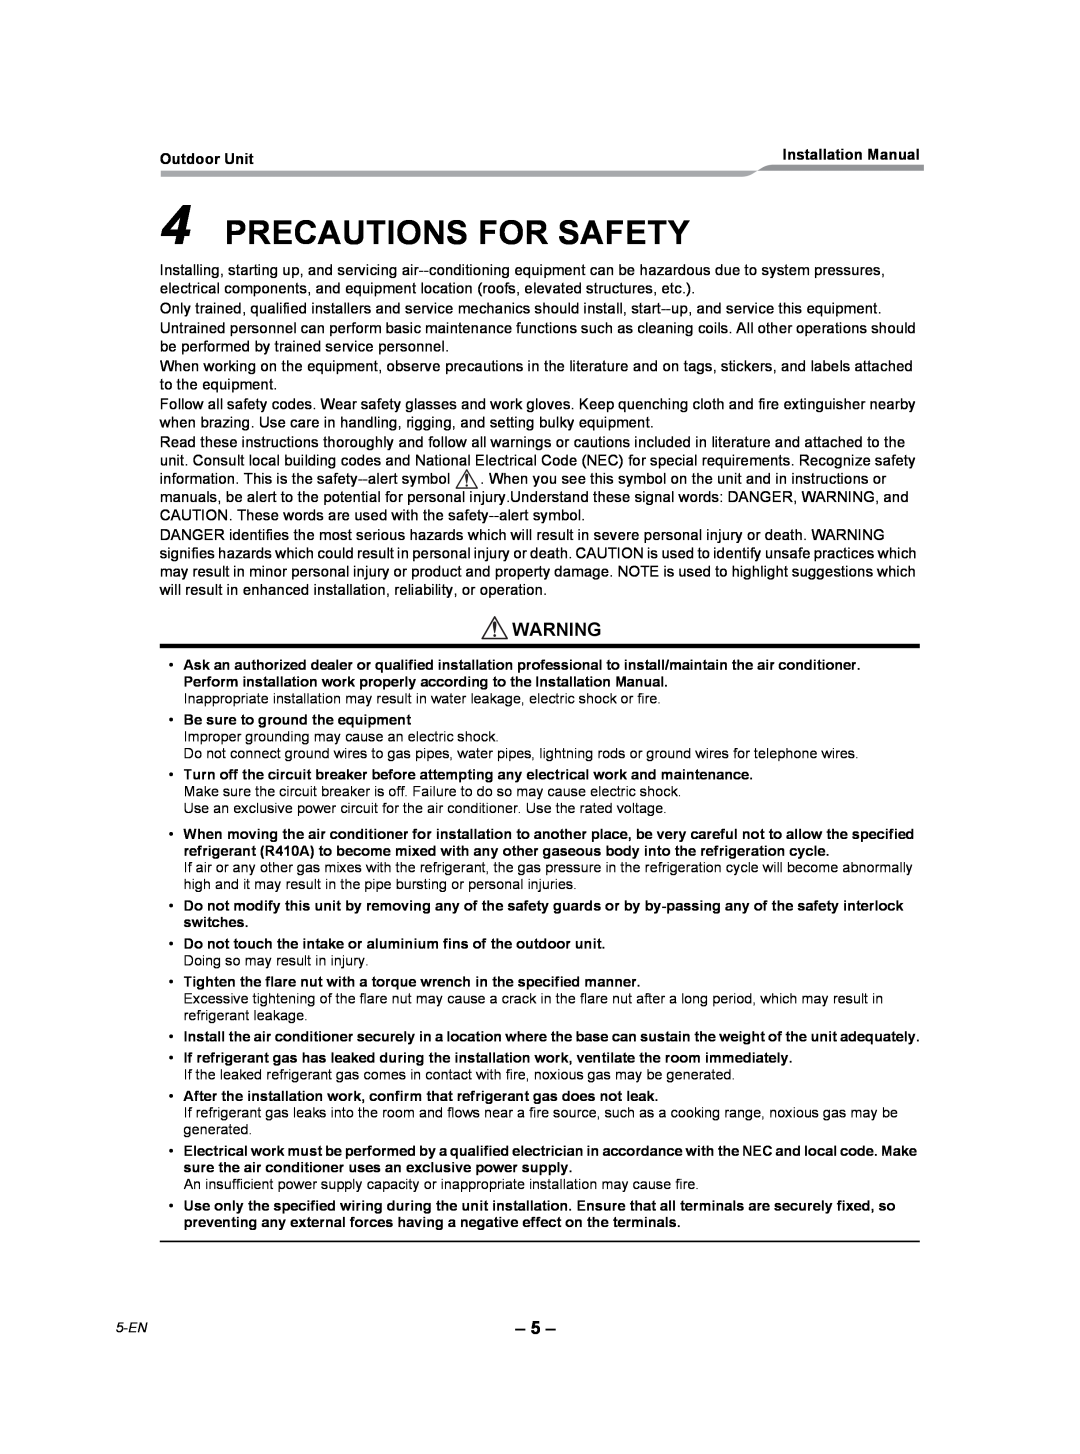 Toshiba RAV-SP180AT2-UL installation manual Precautions For Safety 